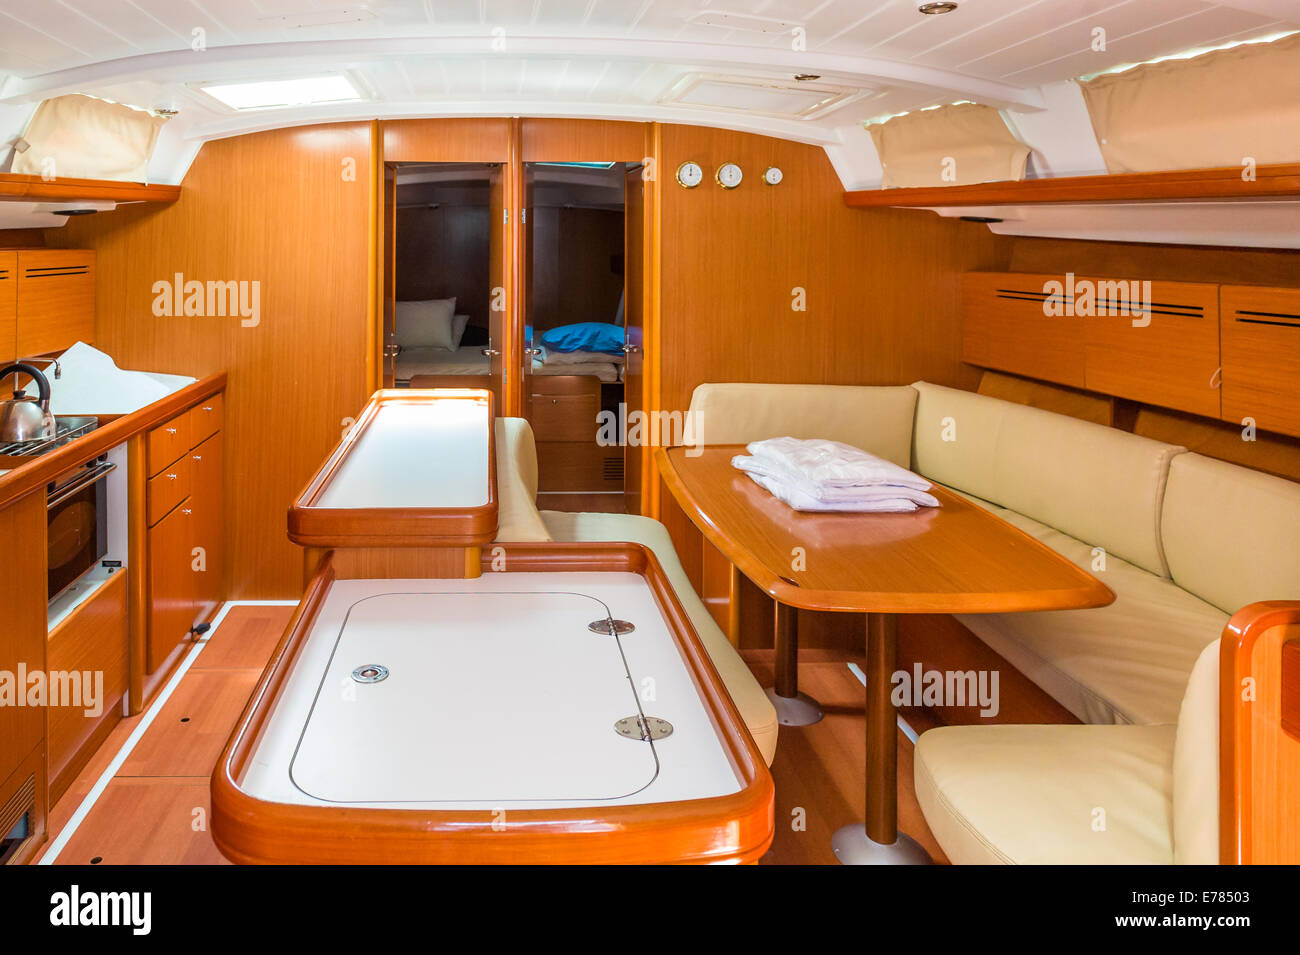 Sailing boat interior Stock Photo